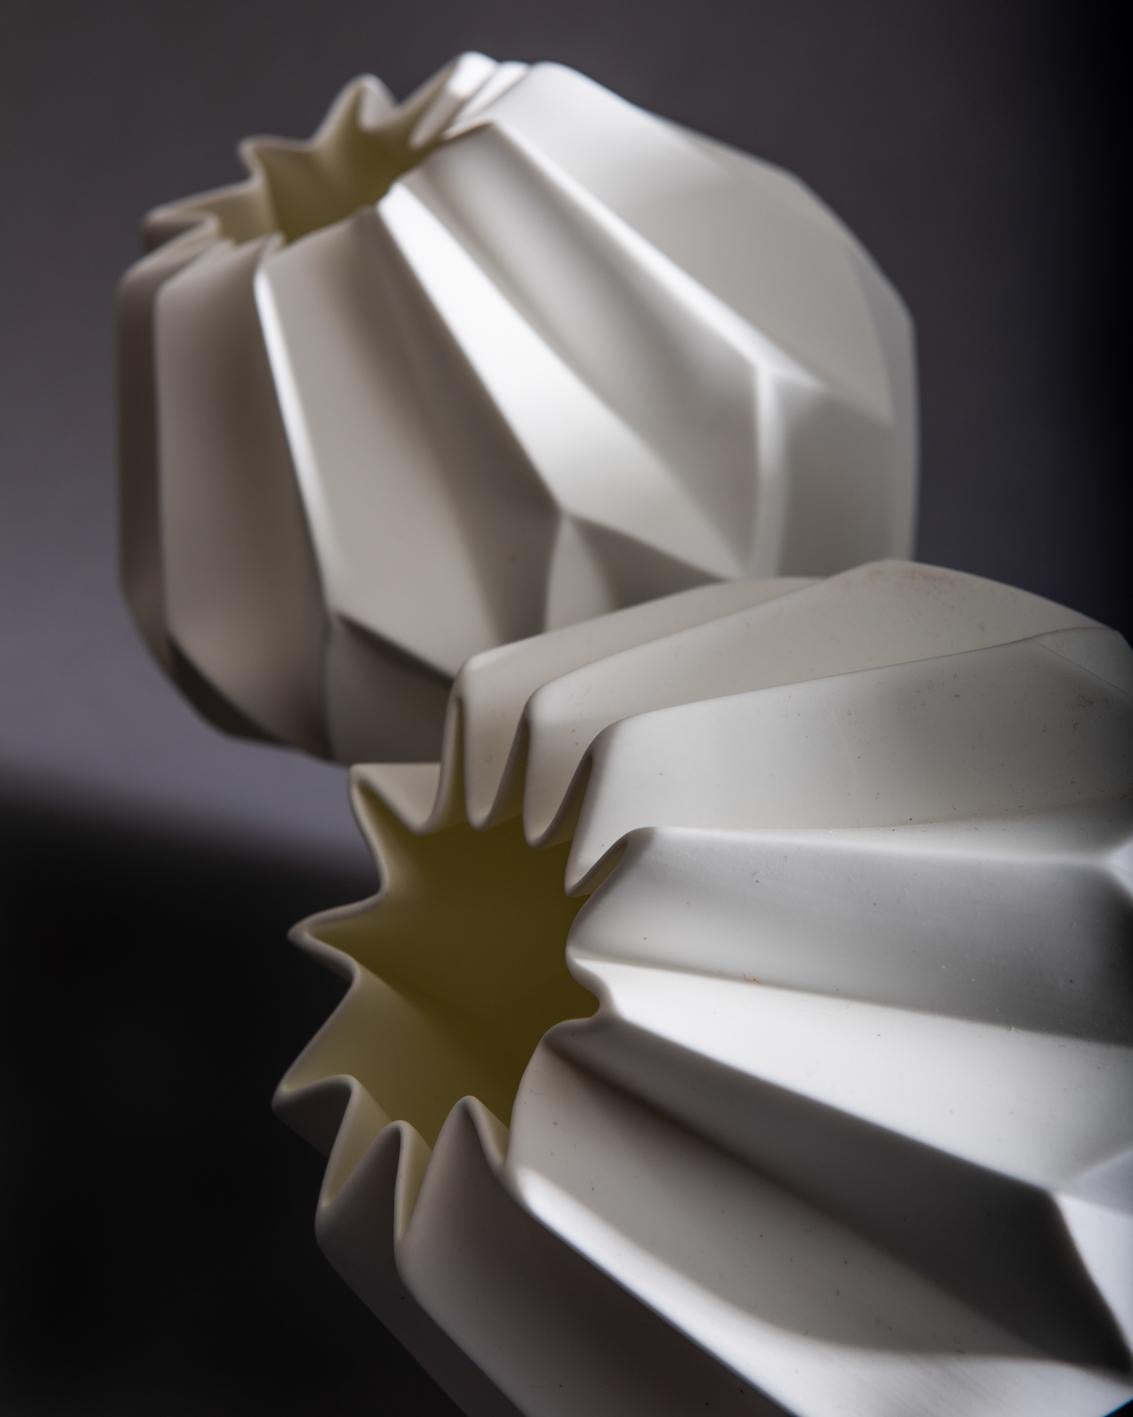 Fired “Slump” Contemporary Origami Ceramic Vase by Studio Morison, Total Slump Type